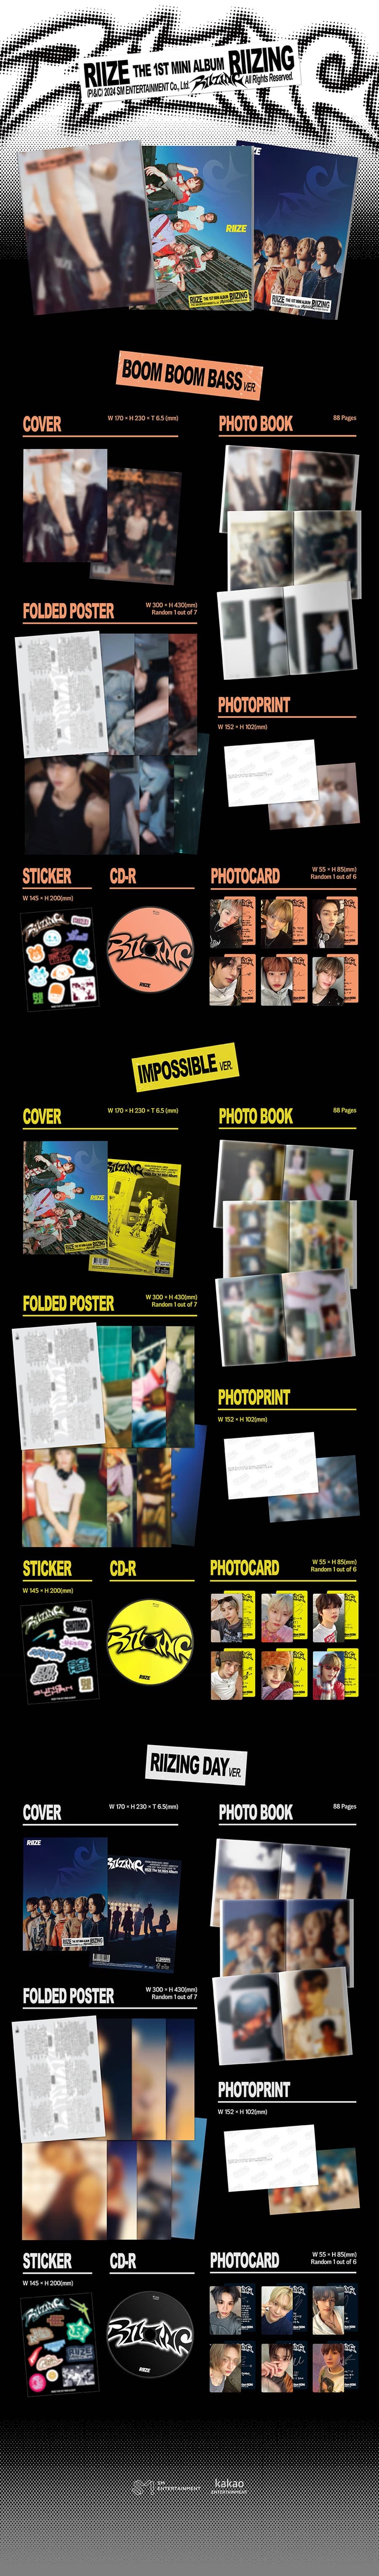 riize-1st-mini-album-riizing-photo-book-ver-wholesales